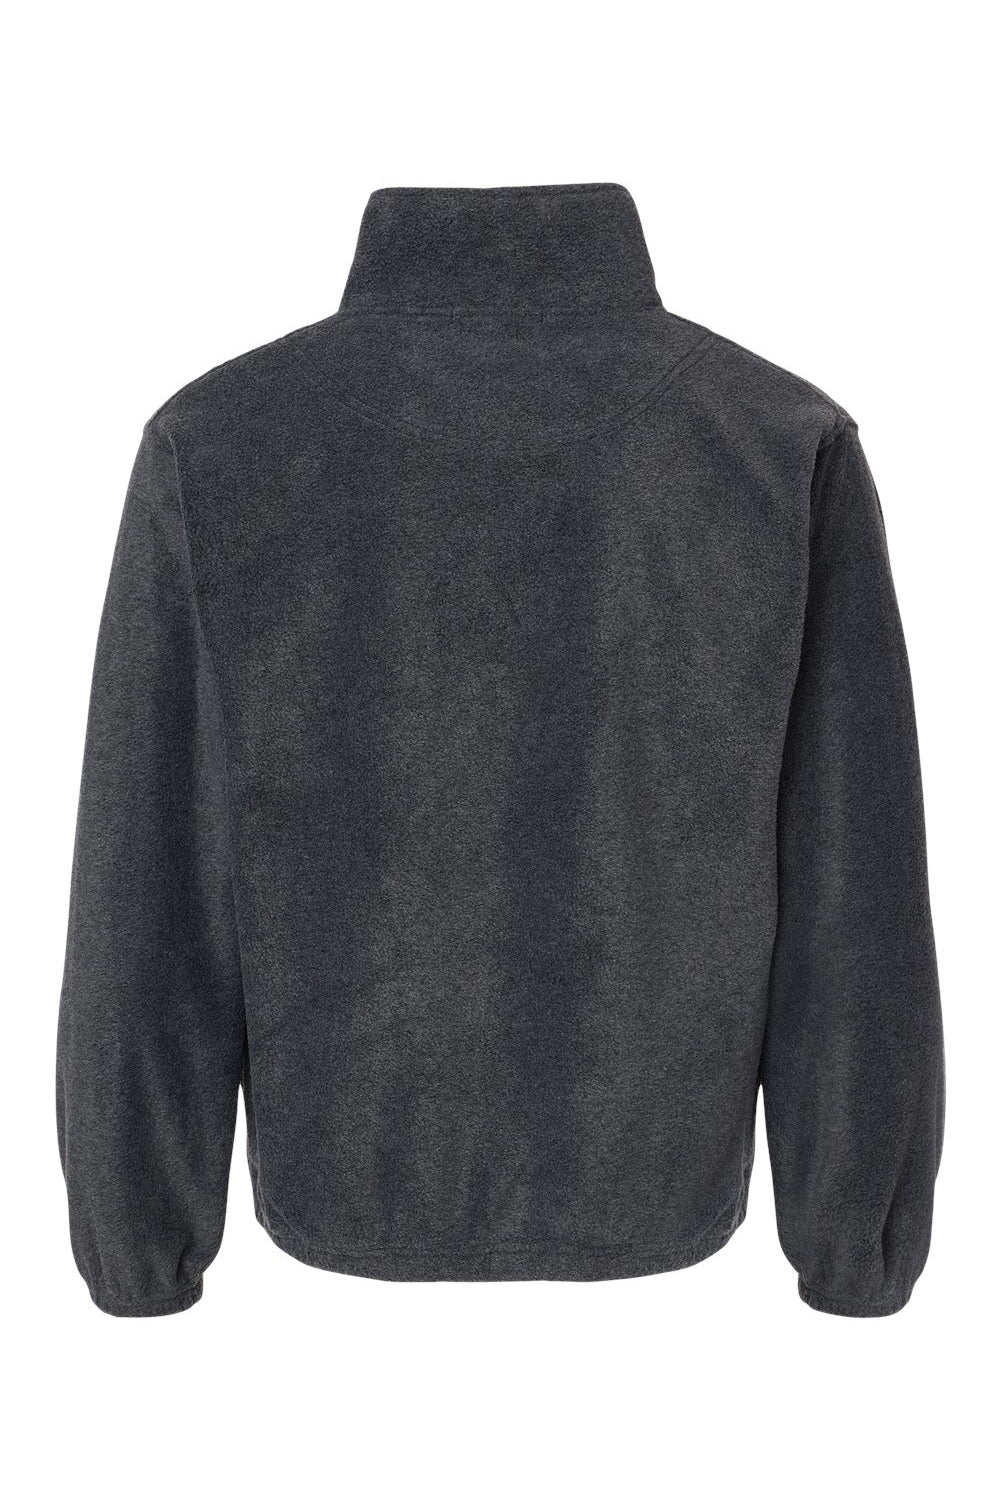 Burnside 3052 Mens Polar Fleece 1/4 Zip Sweatshirt Heather Charcoal Grey Flat Back